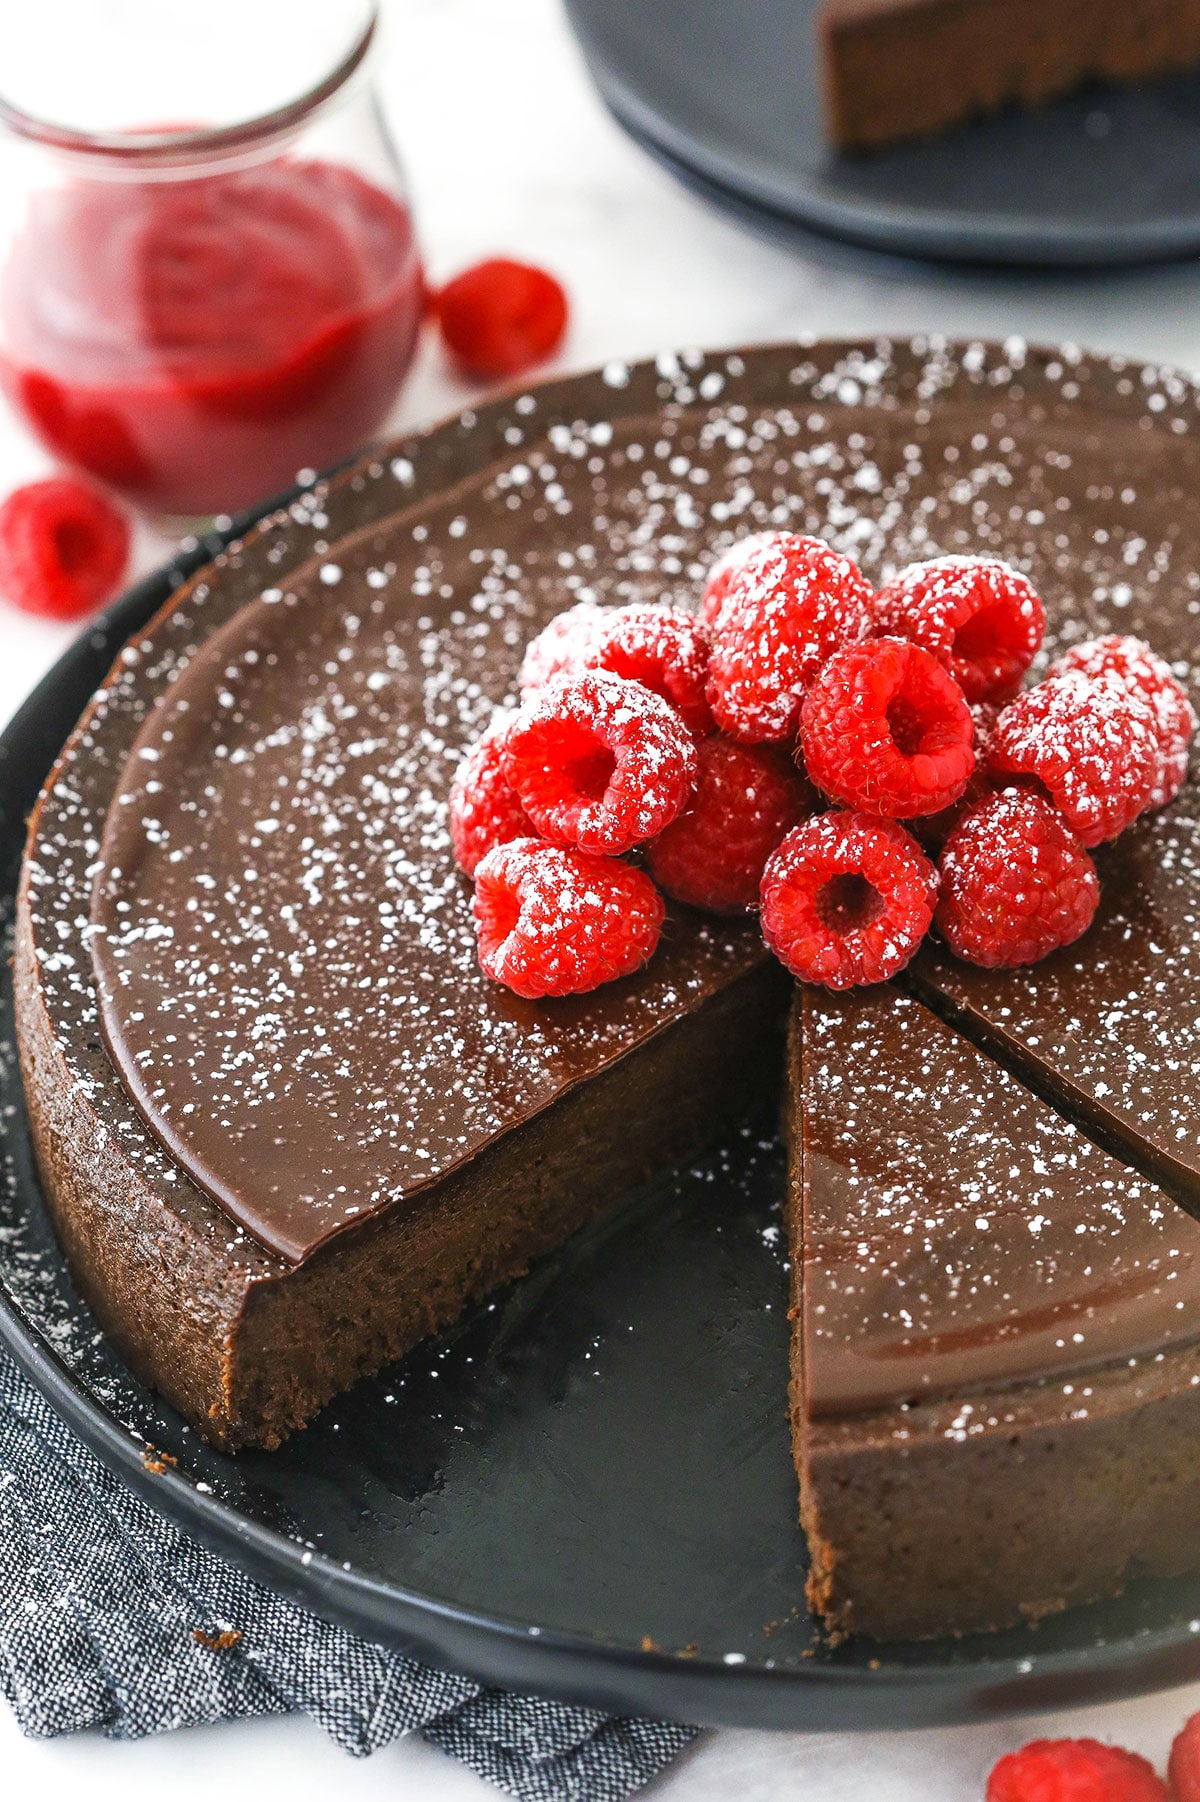 Homemade Chocolate Torte